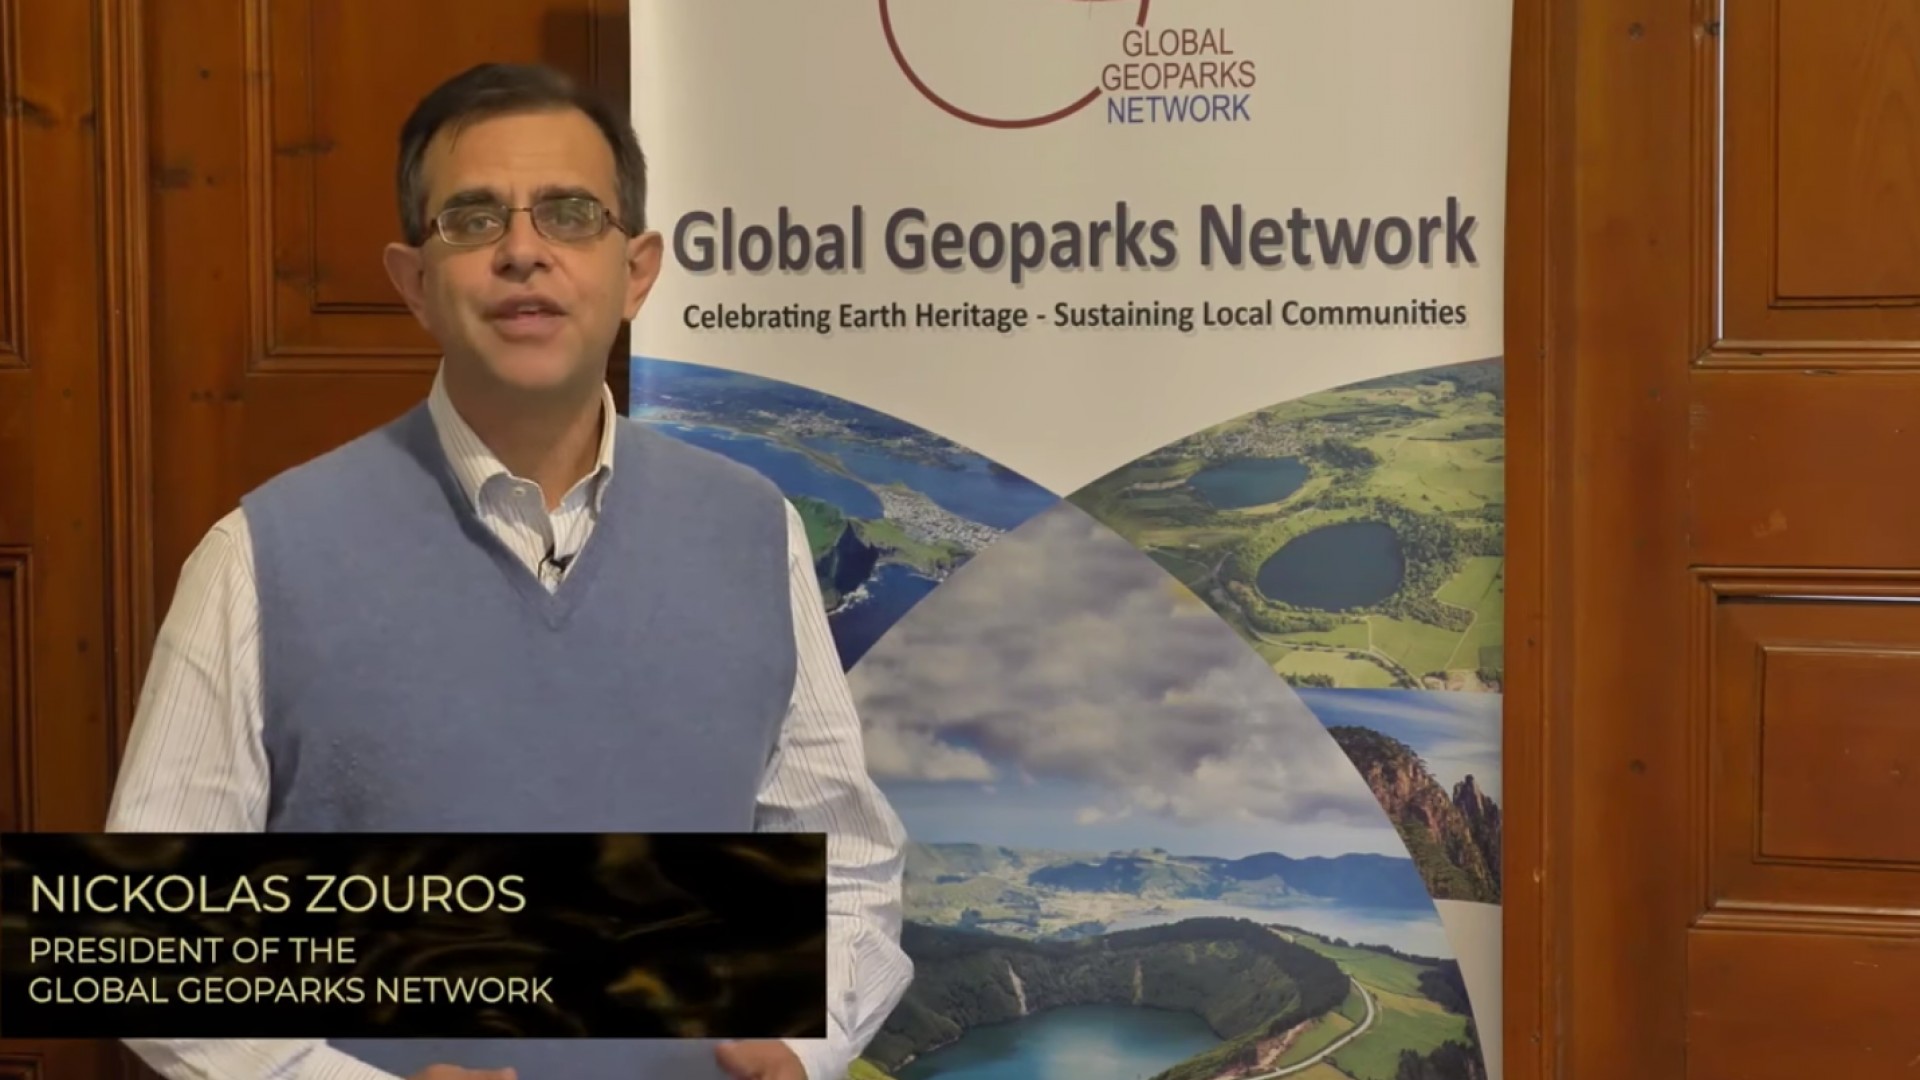 Winners of the 1st Global Geoparks Network Film Festival Announced